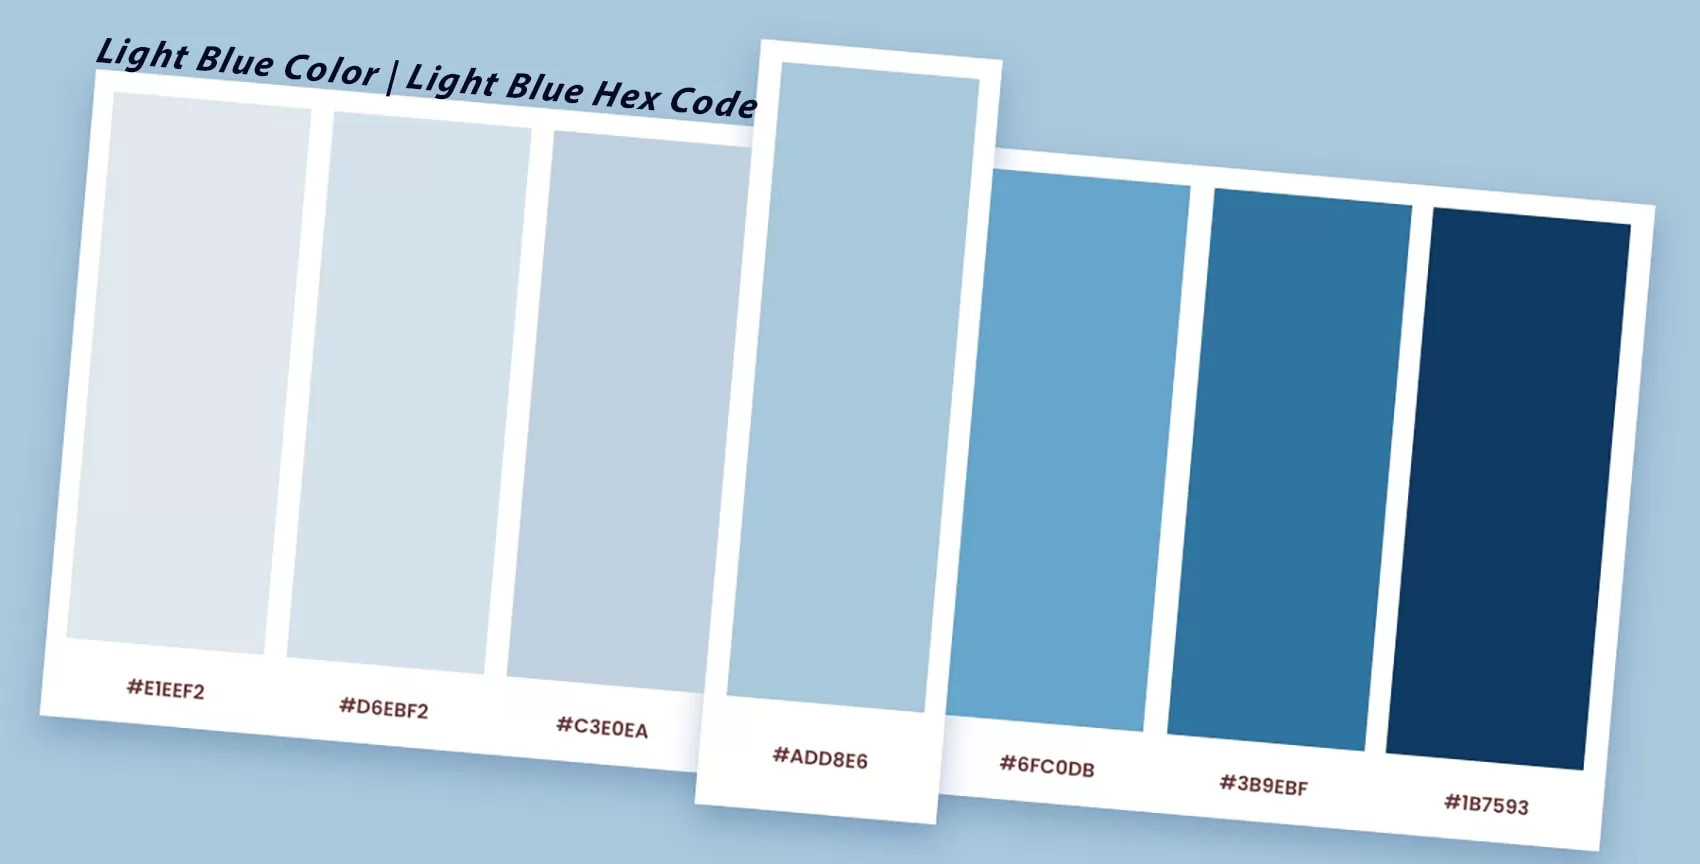 Light Blue Color | Light Blue Hex Code